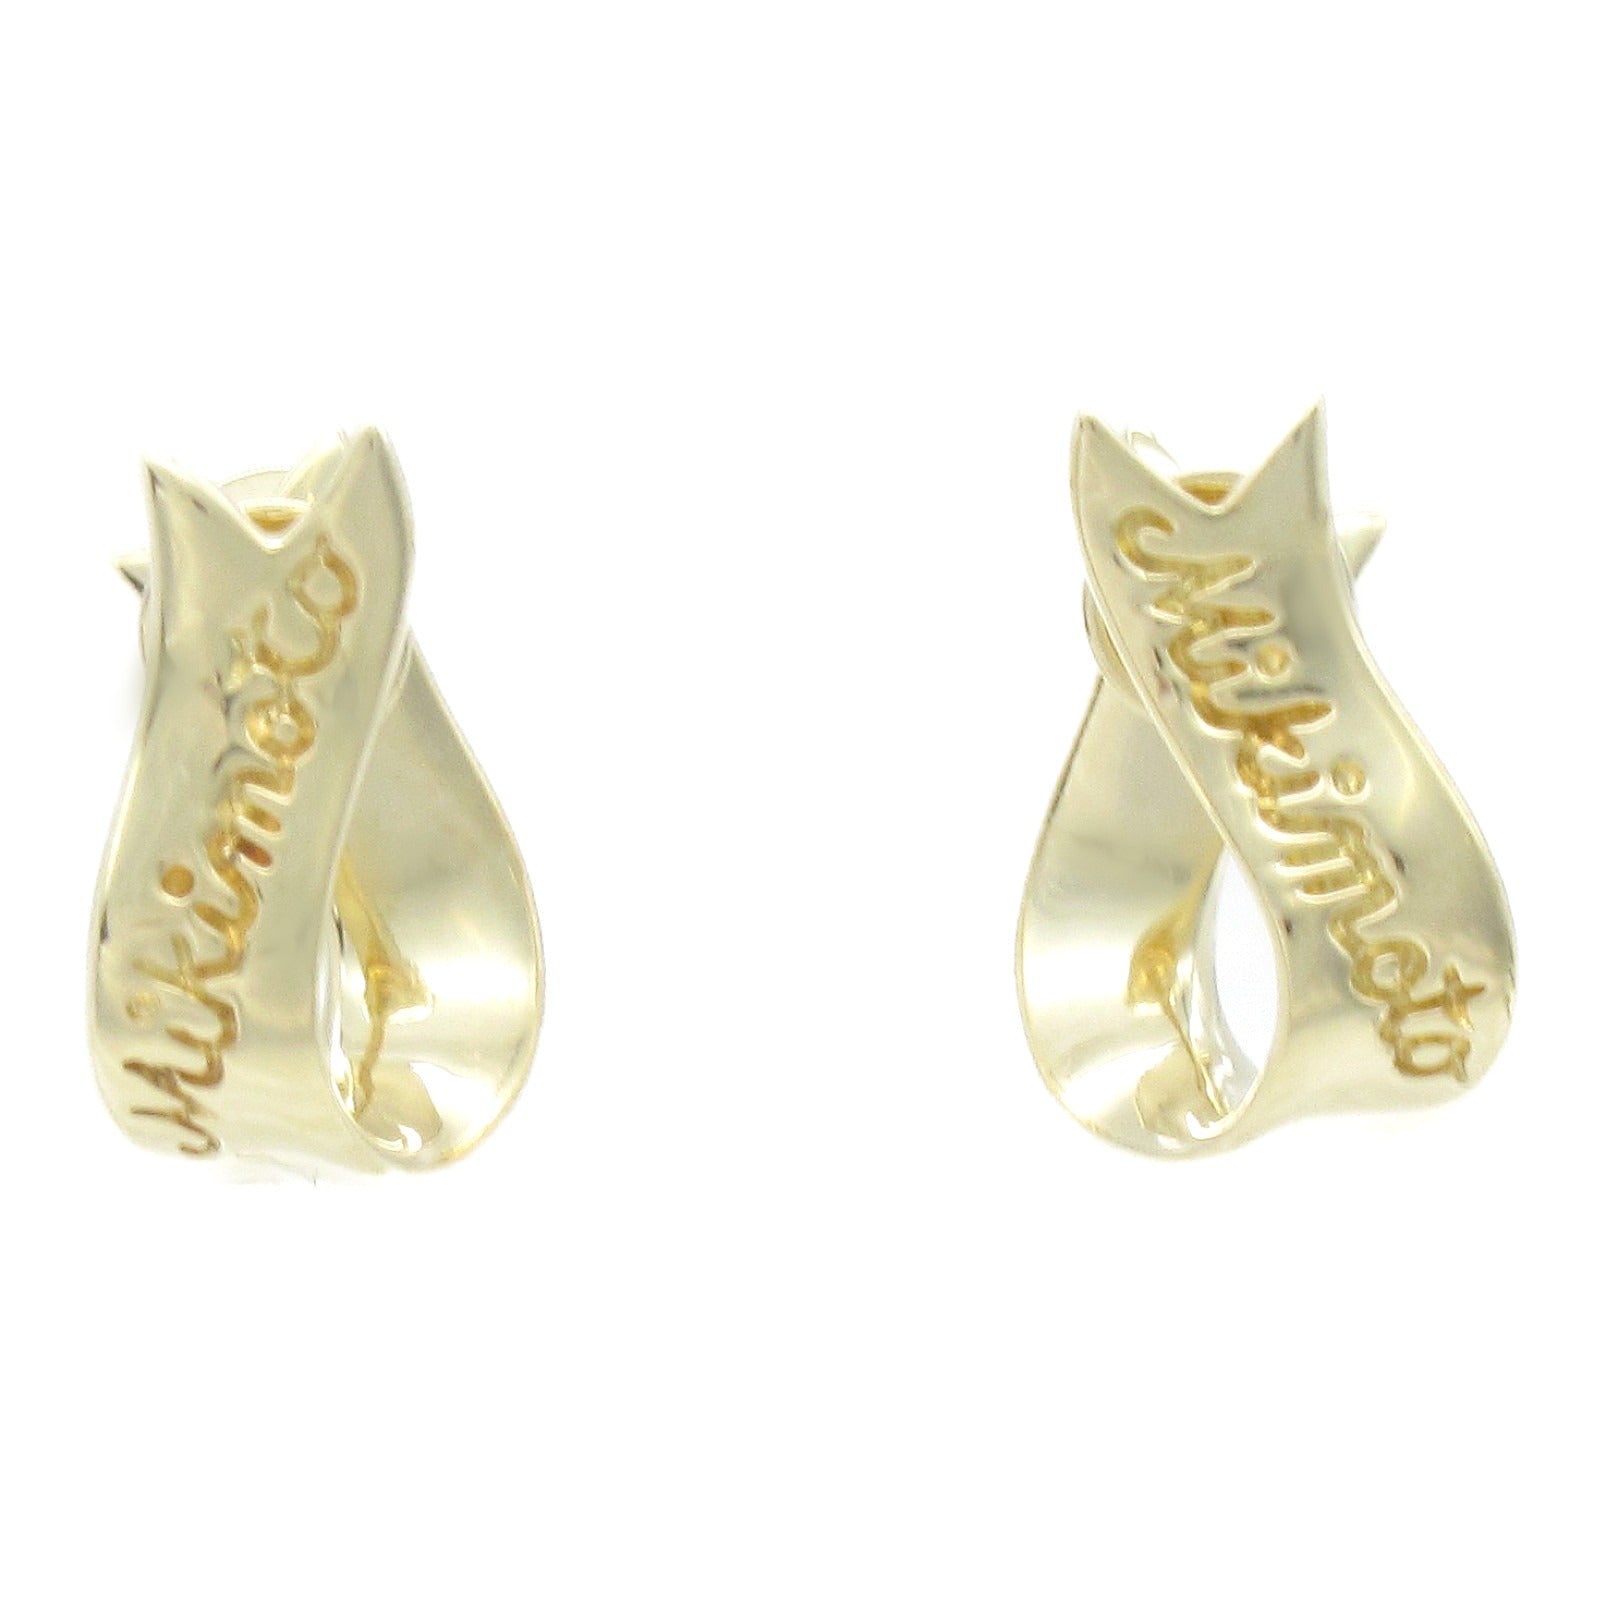 Micimoto Micimoto Earring Jewelry K18 (Yellow G)  Gold  ()